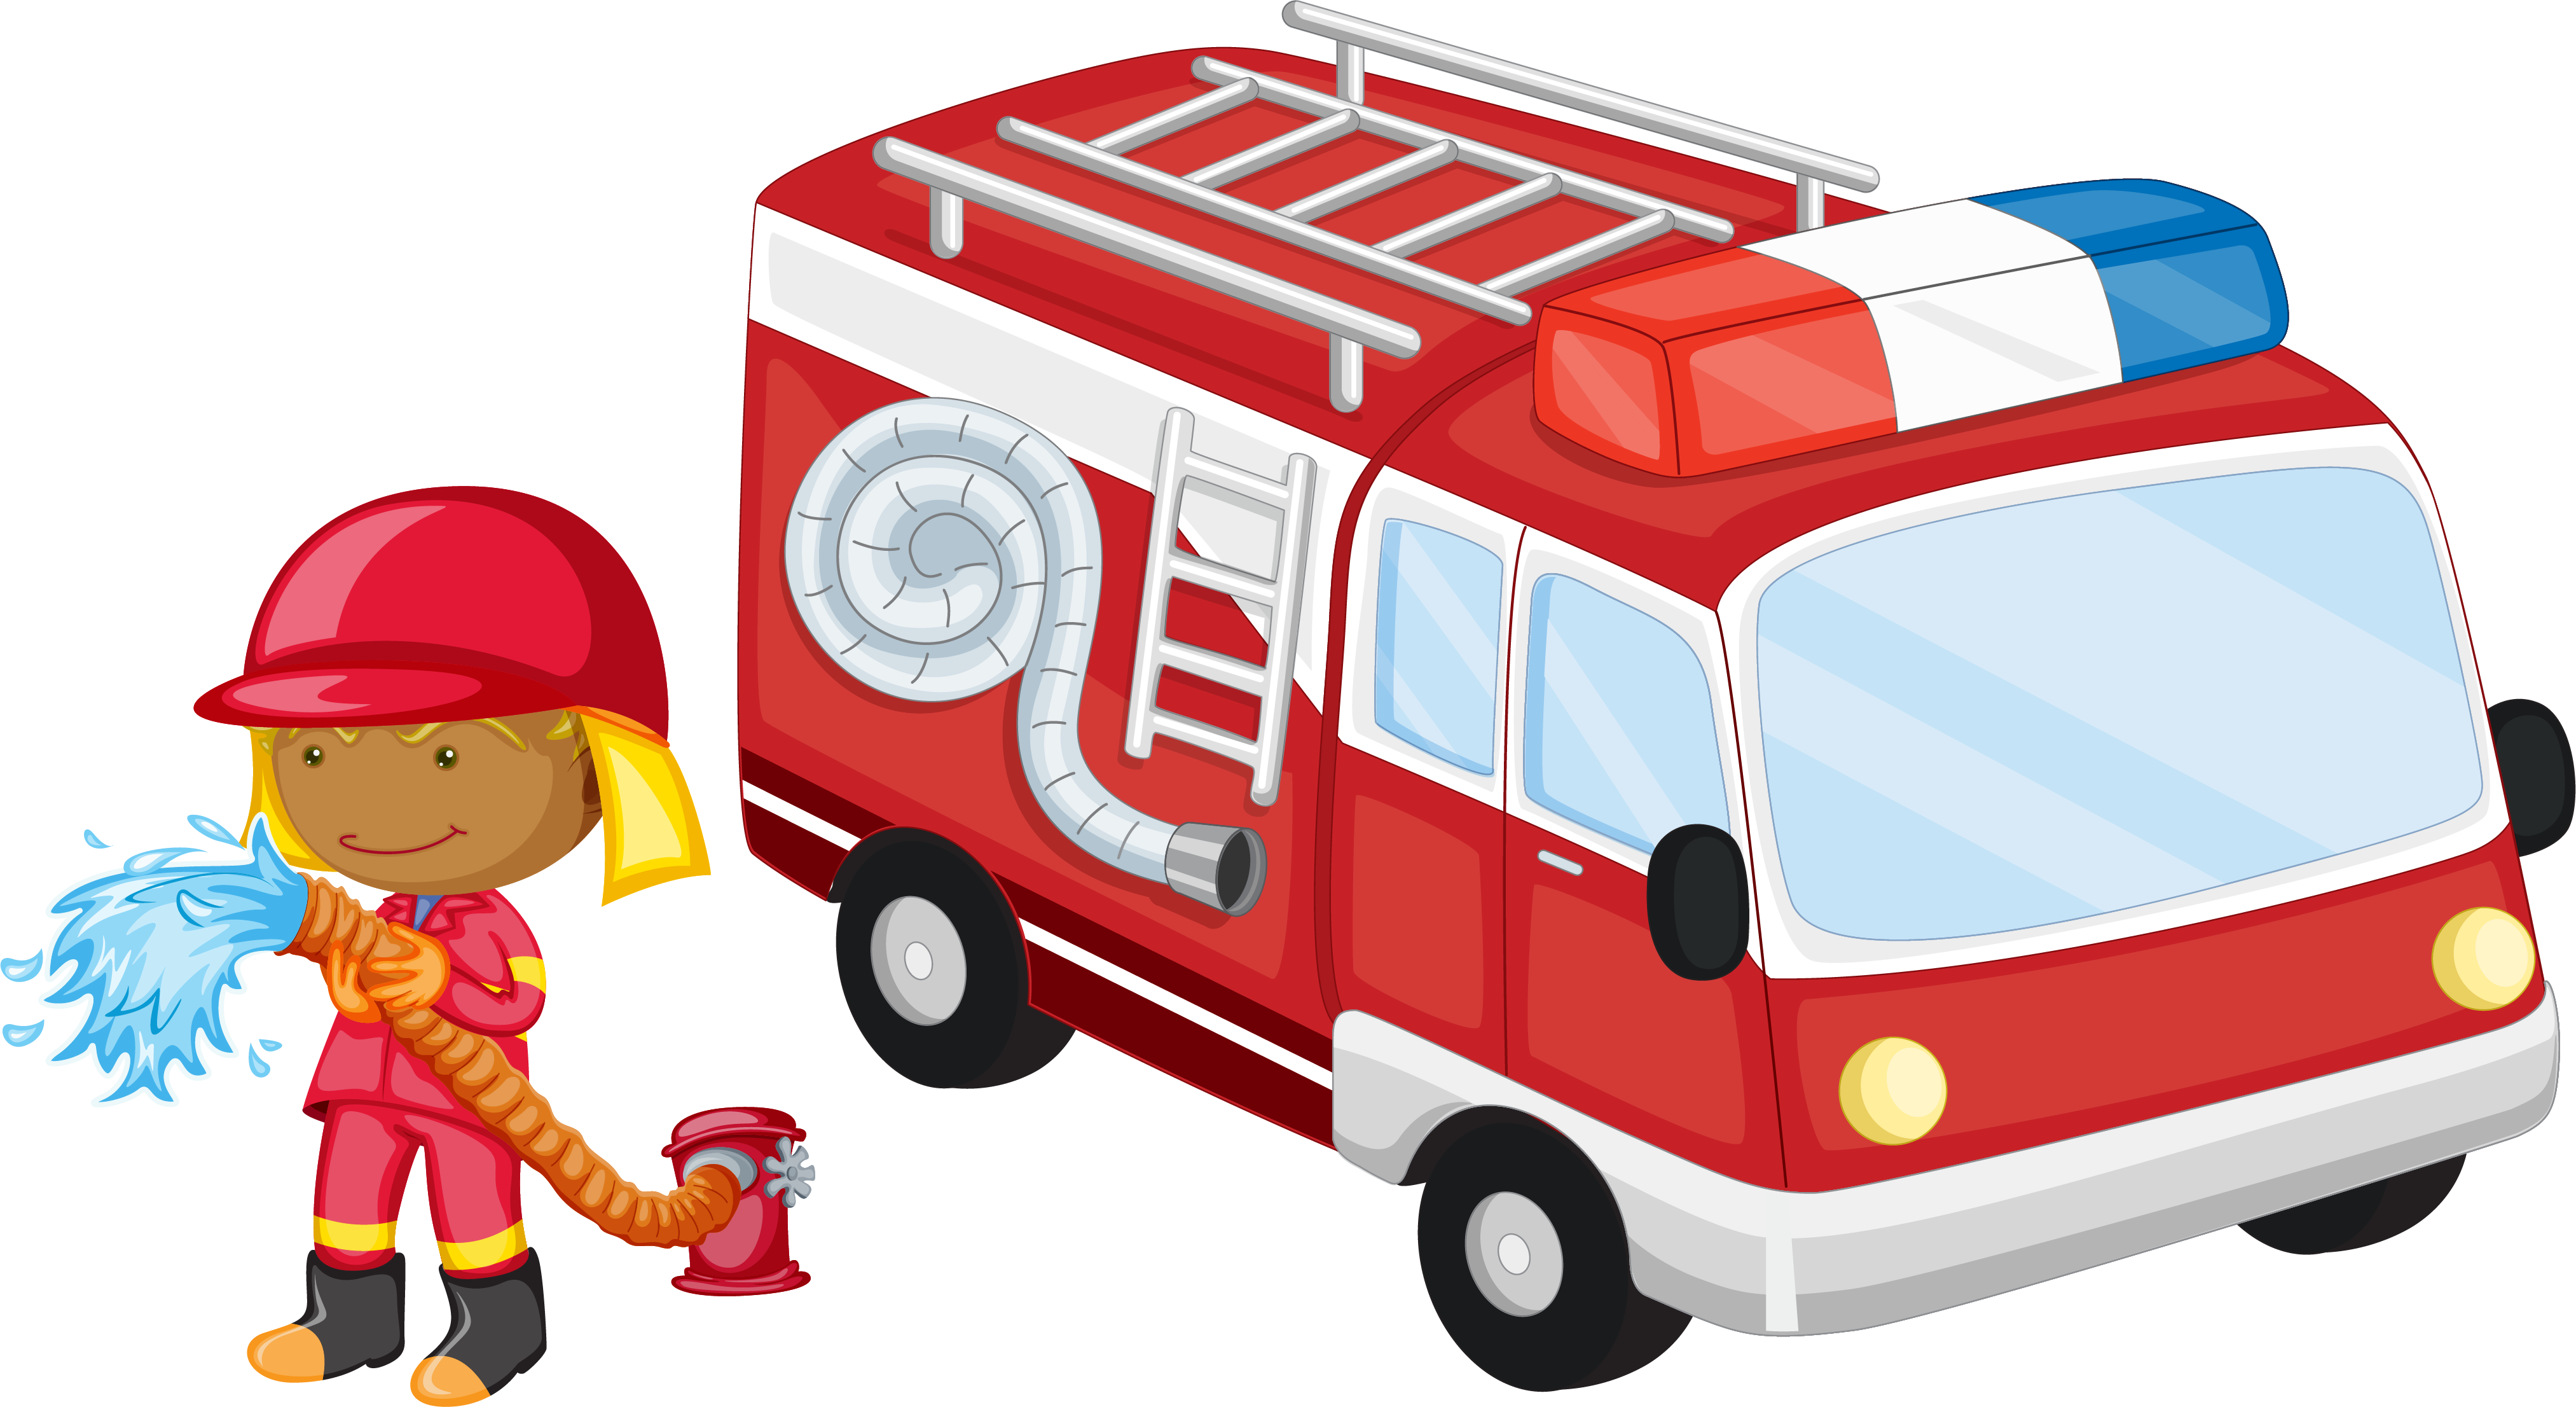 Fire engine Poster Cartoon - Vector cartoon fire truck and firefighters